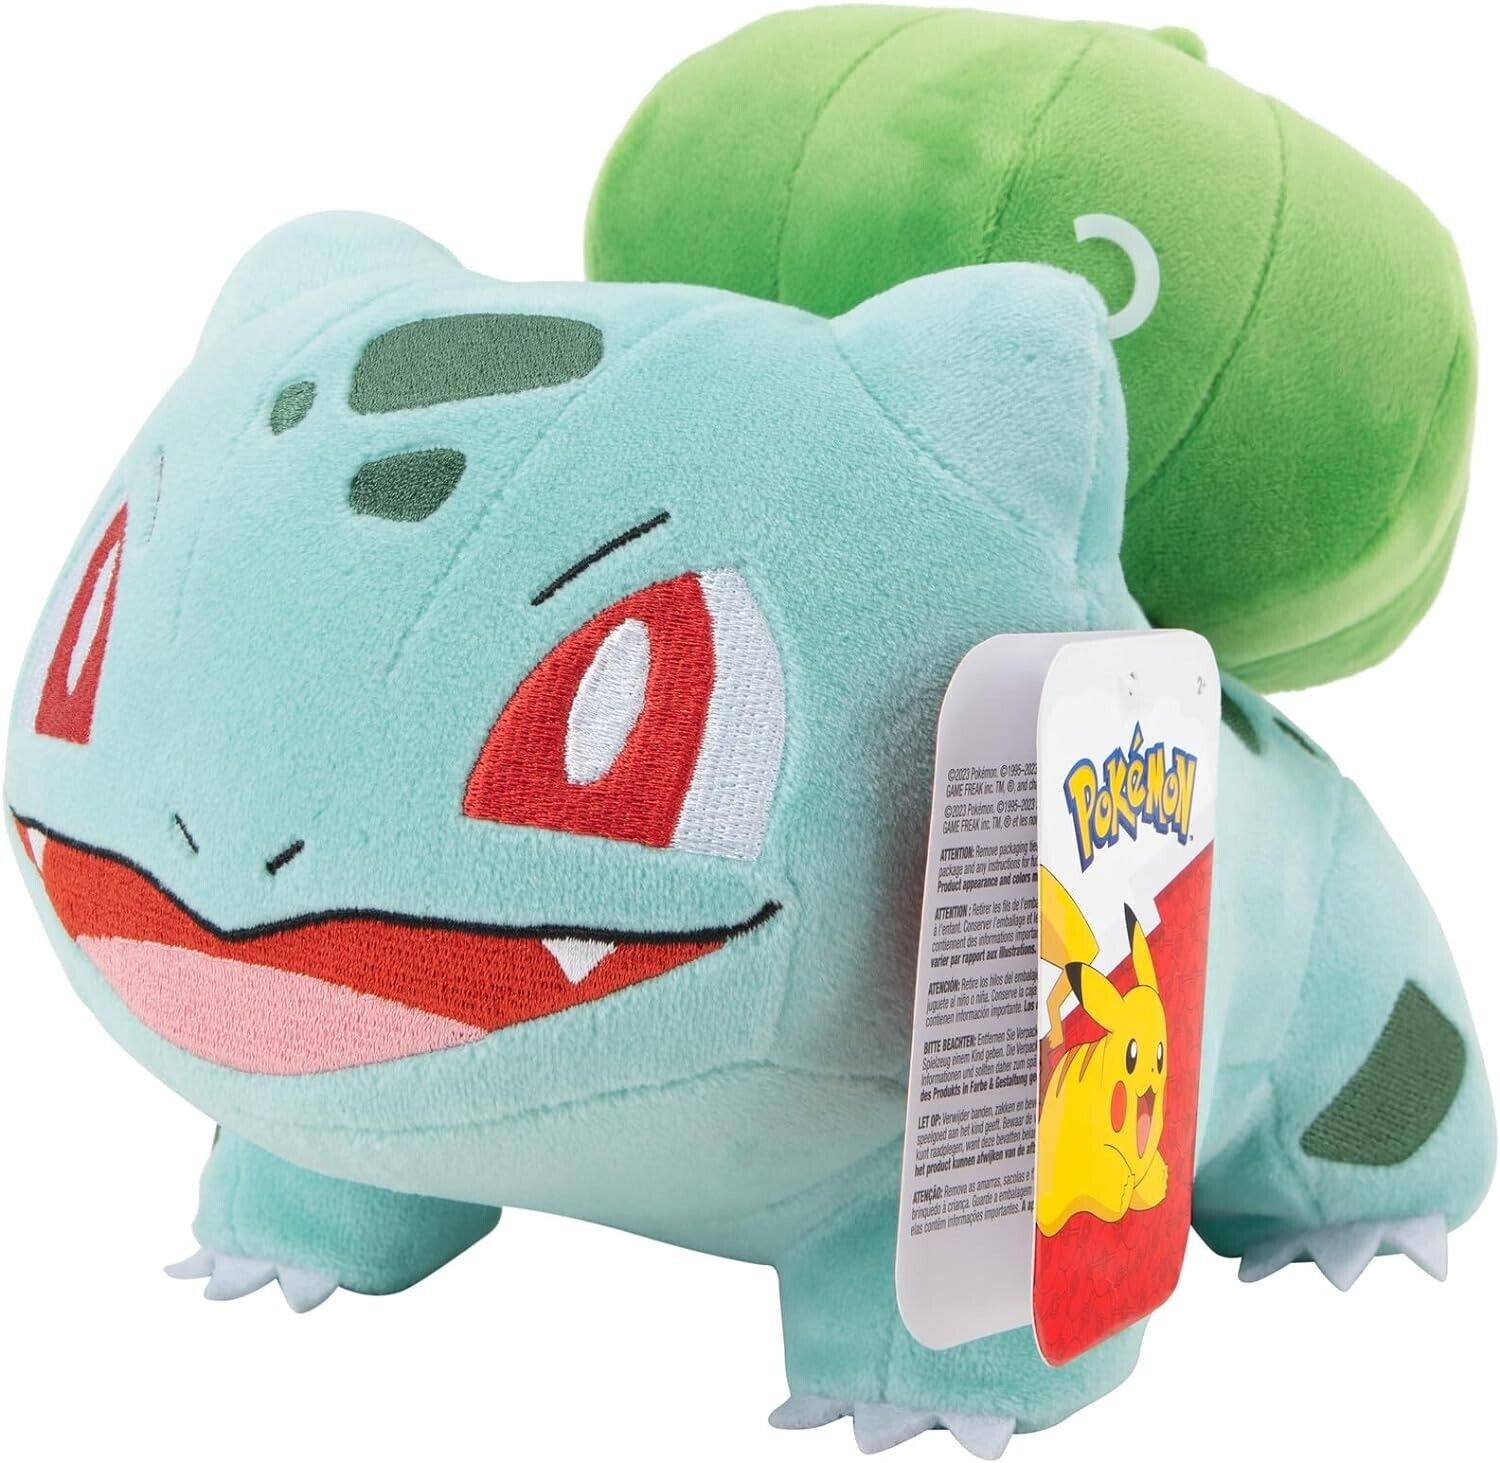 Pokémon Official & Premium Quality 8-inch Bulbasaur Adorable, Ultra-Soft, Plush